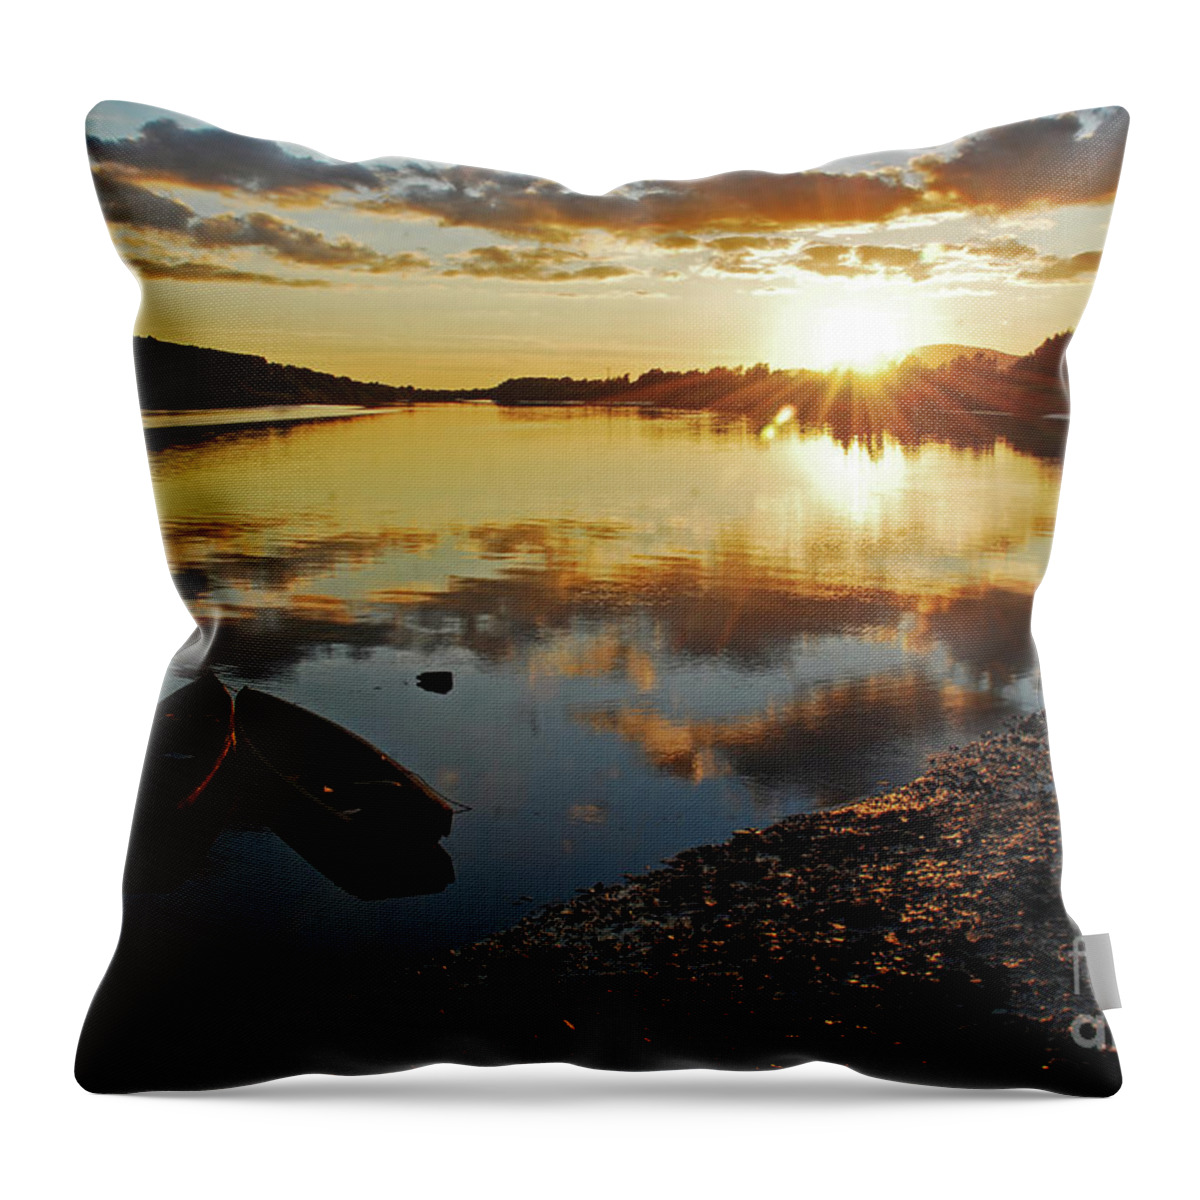 Sunset Throw Pillow featuring the photograph River Suir sunset at Fiddown by Joe Cashin